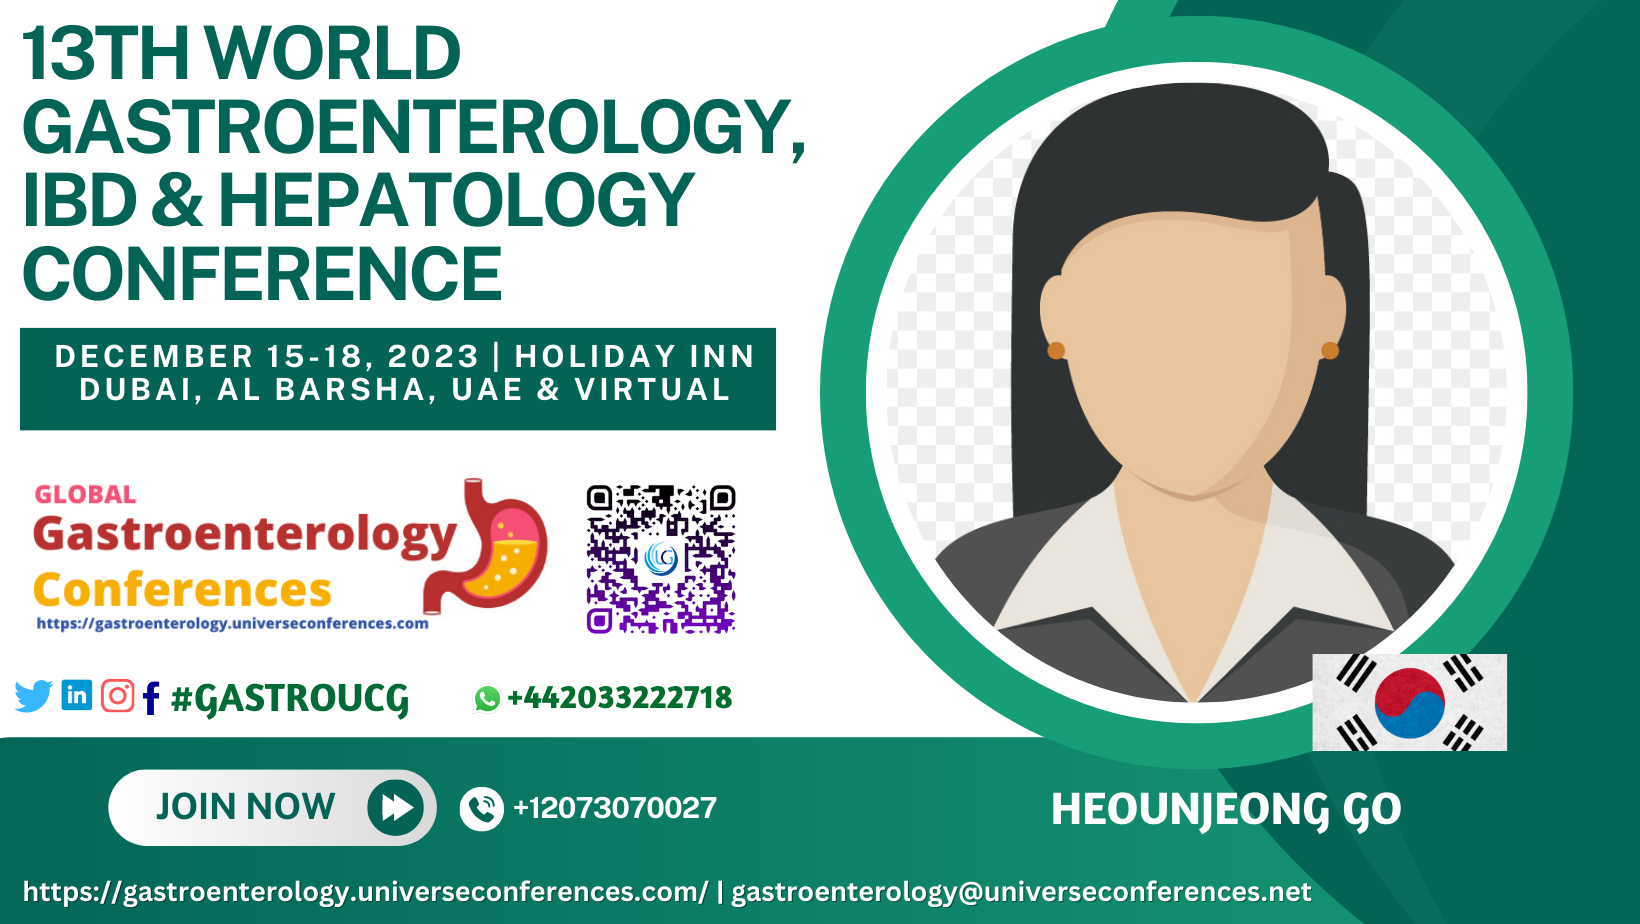 Heounjeong Go_13th World Gastroenterology, IBD & Hepatology Conference